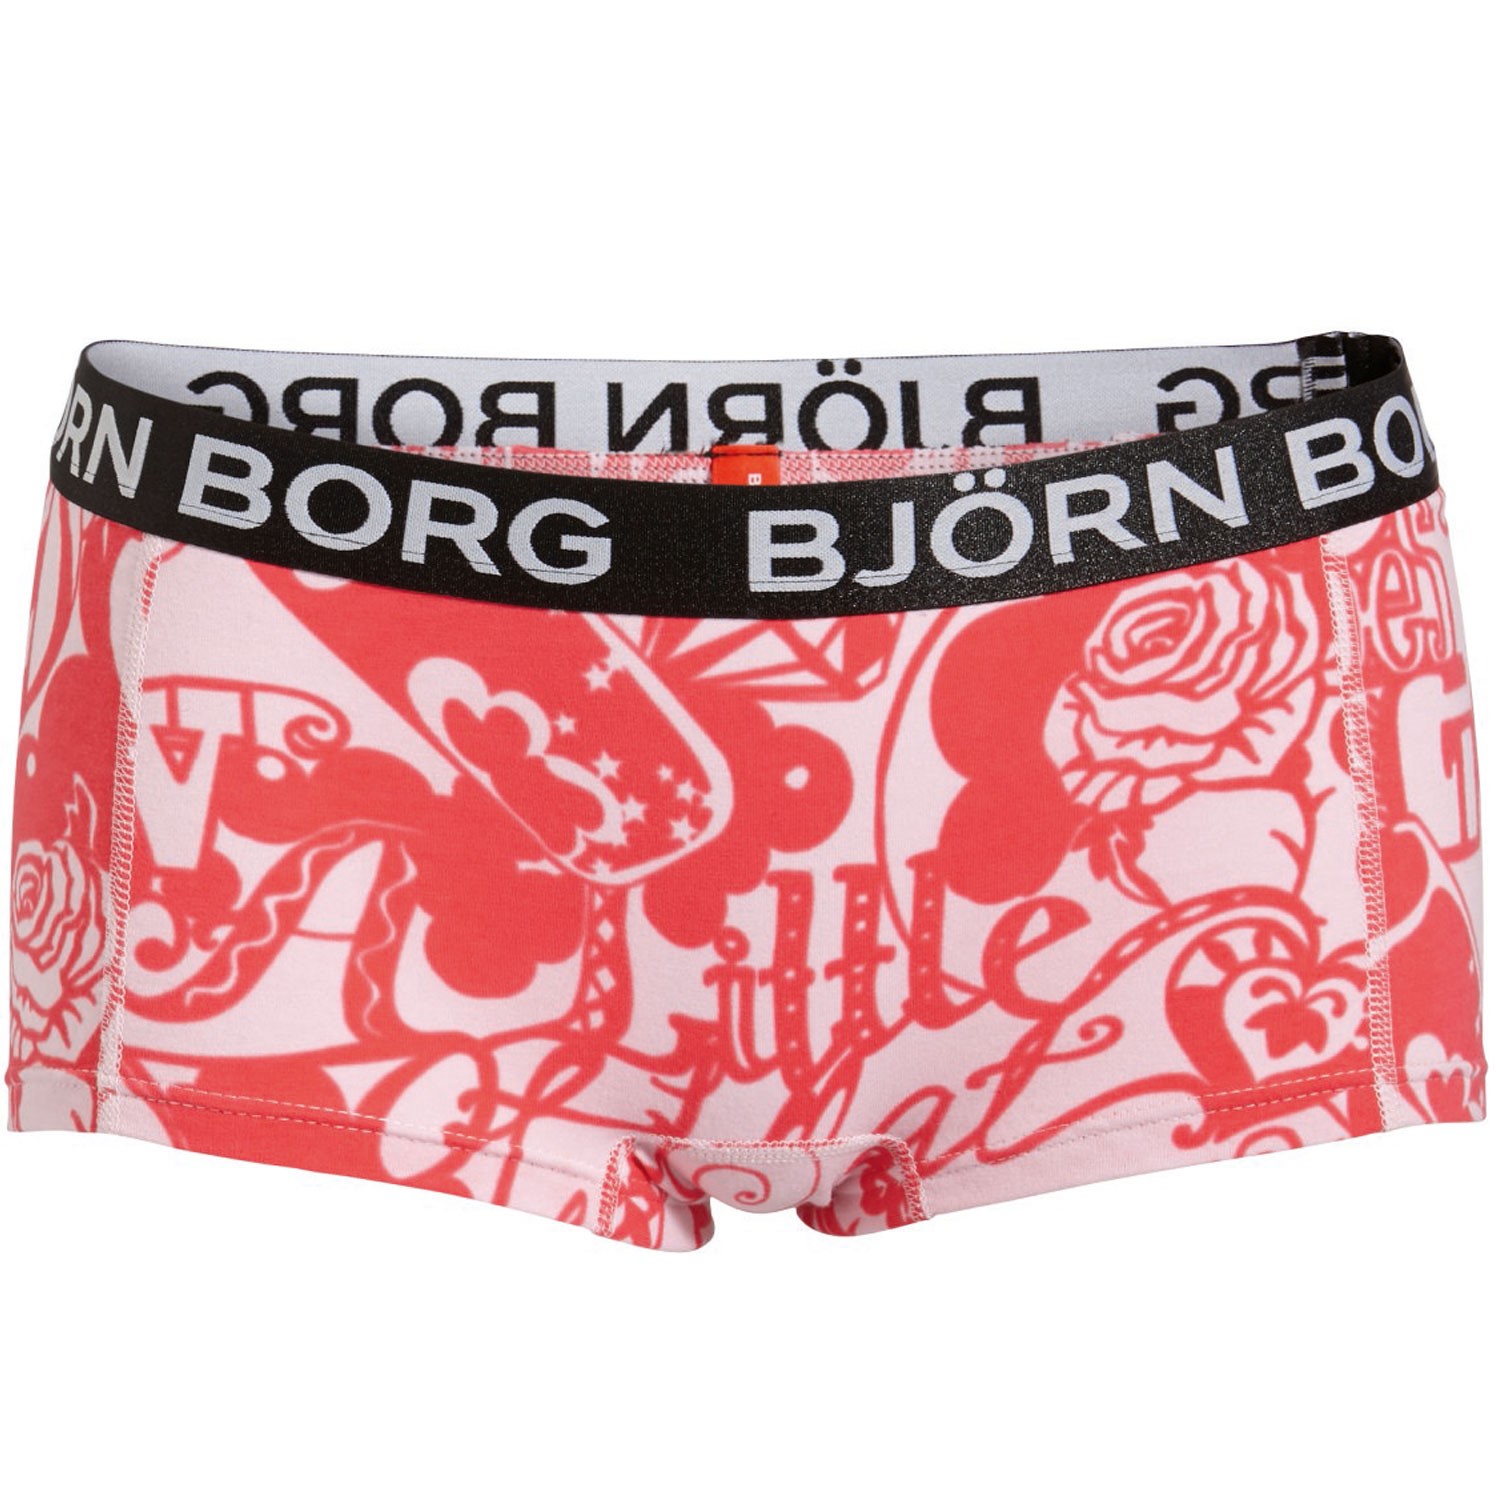 Björn Borg Mini Shorts Fancy Text Pink Lady